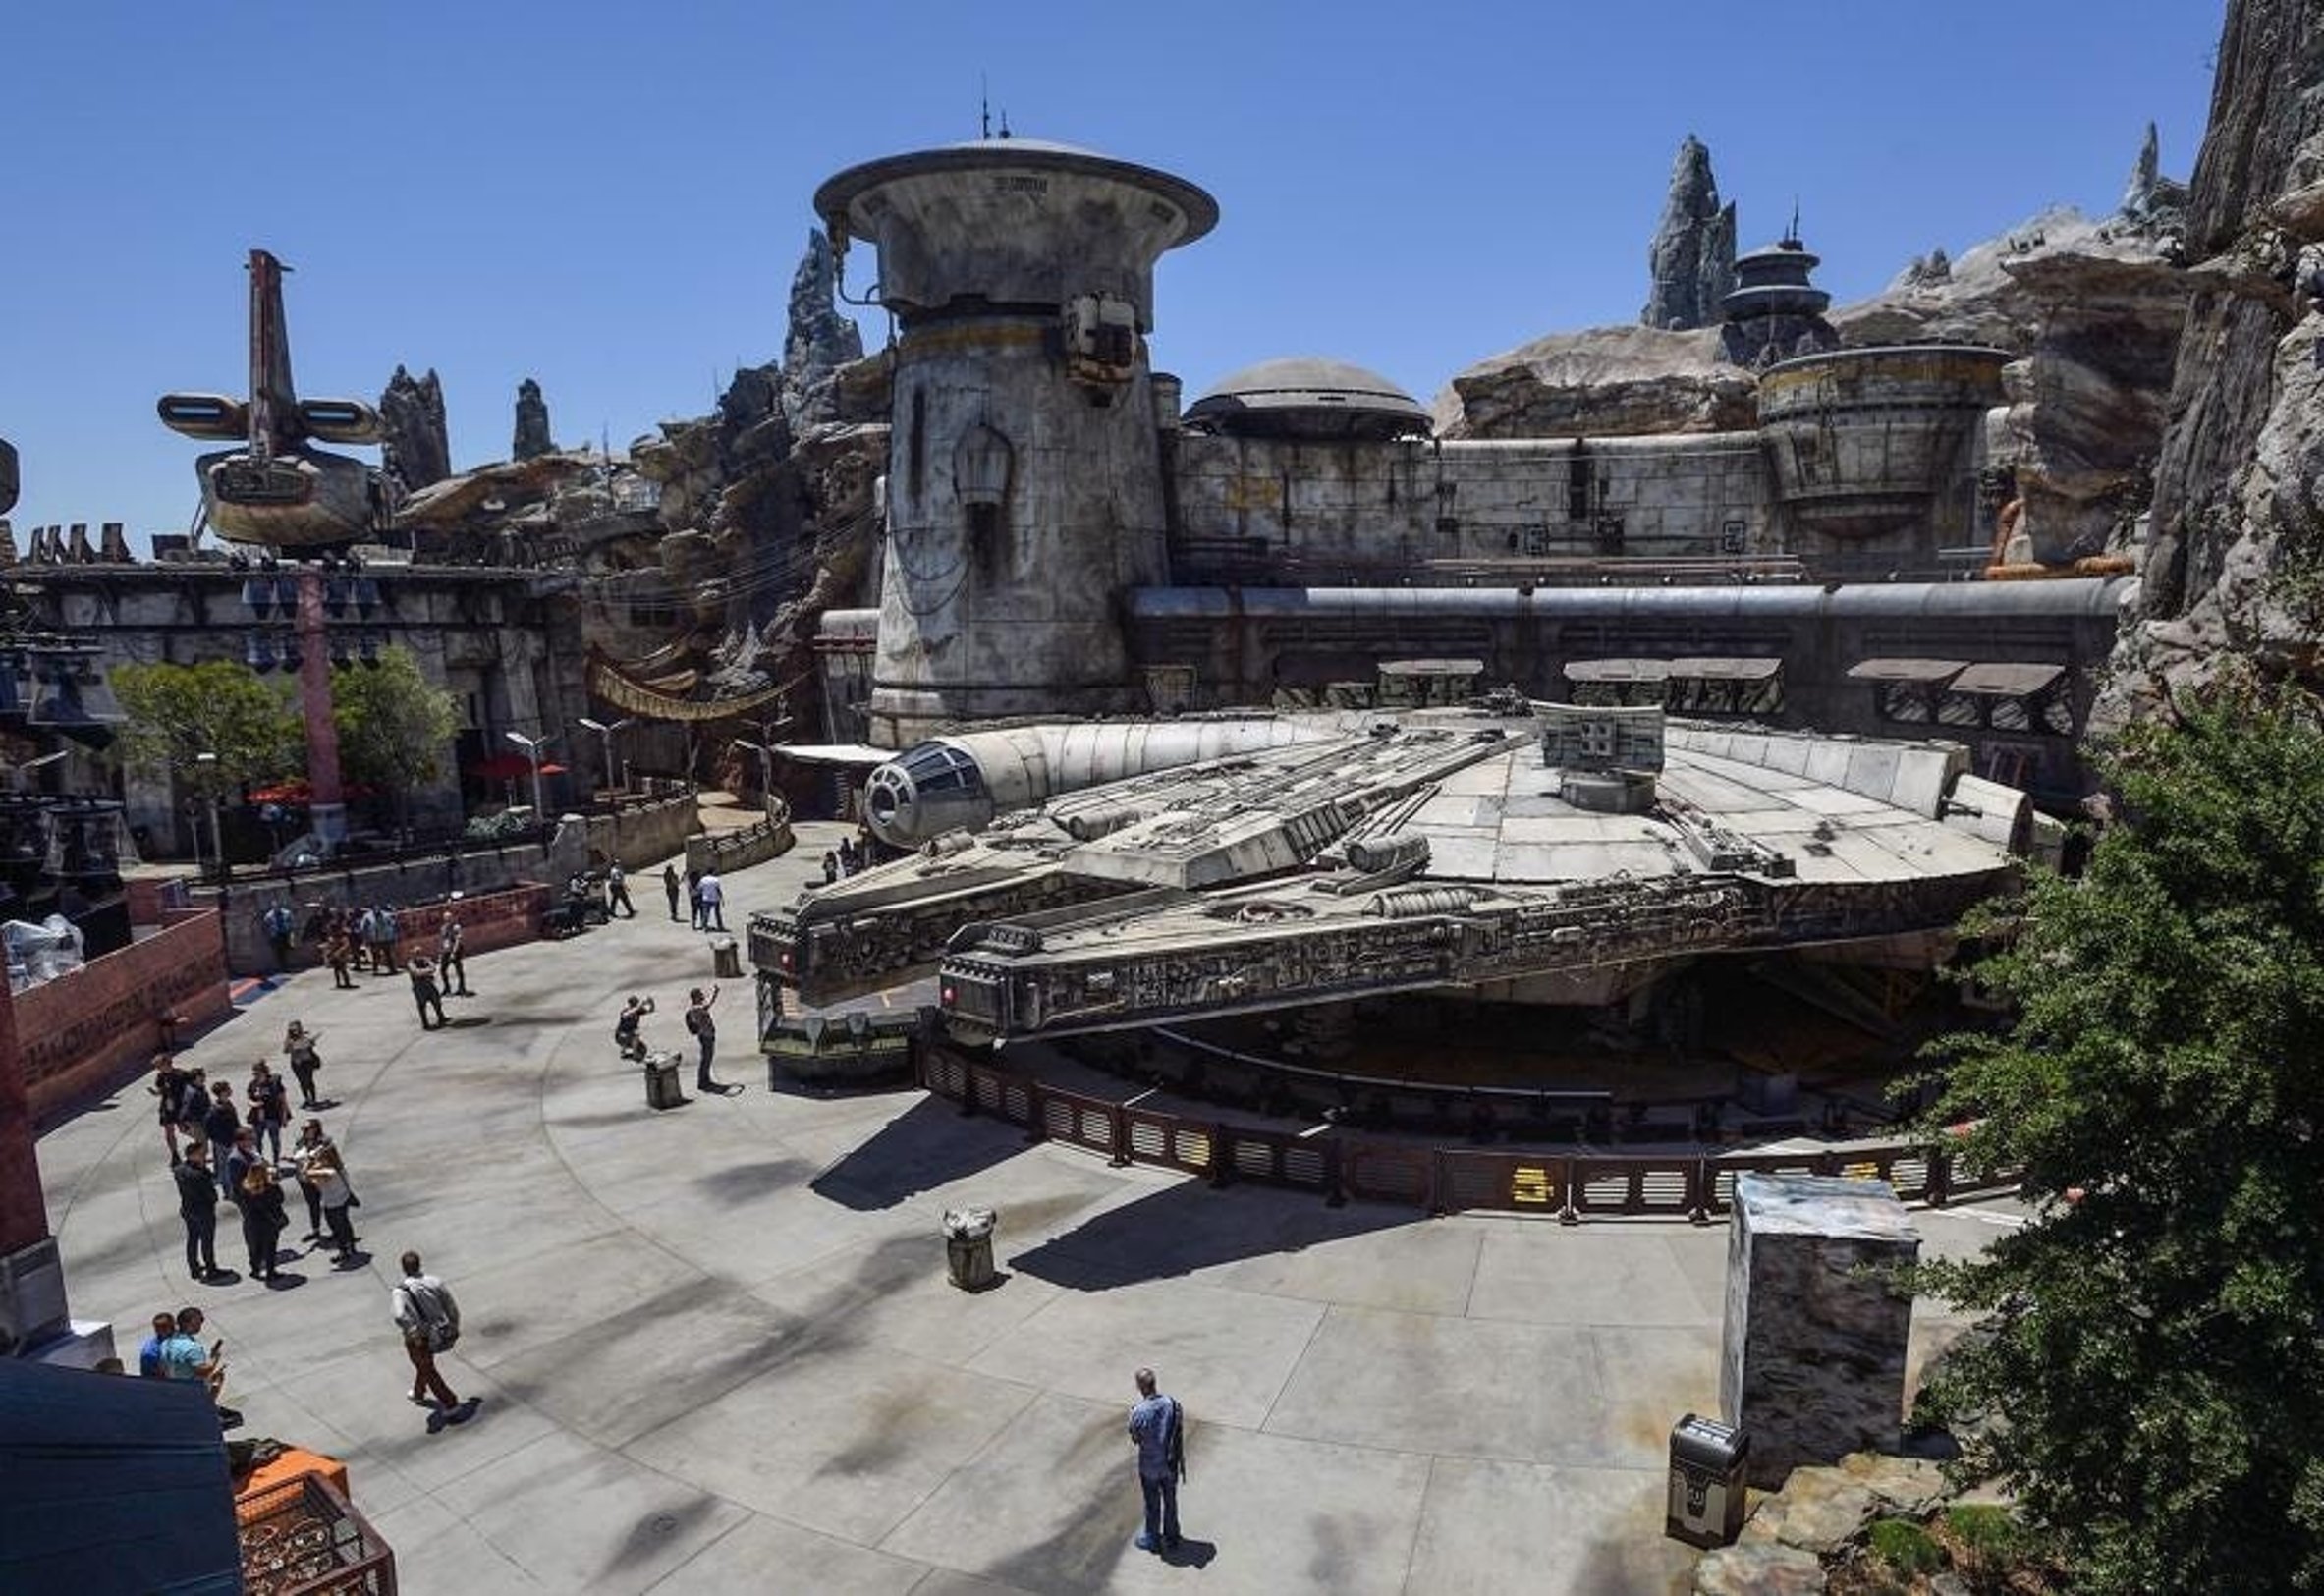 The Way Disneyland Will Celebrate A Star Wars Holiday At Galaxy's Edge